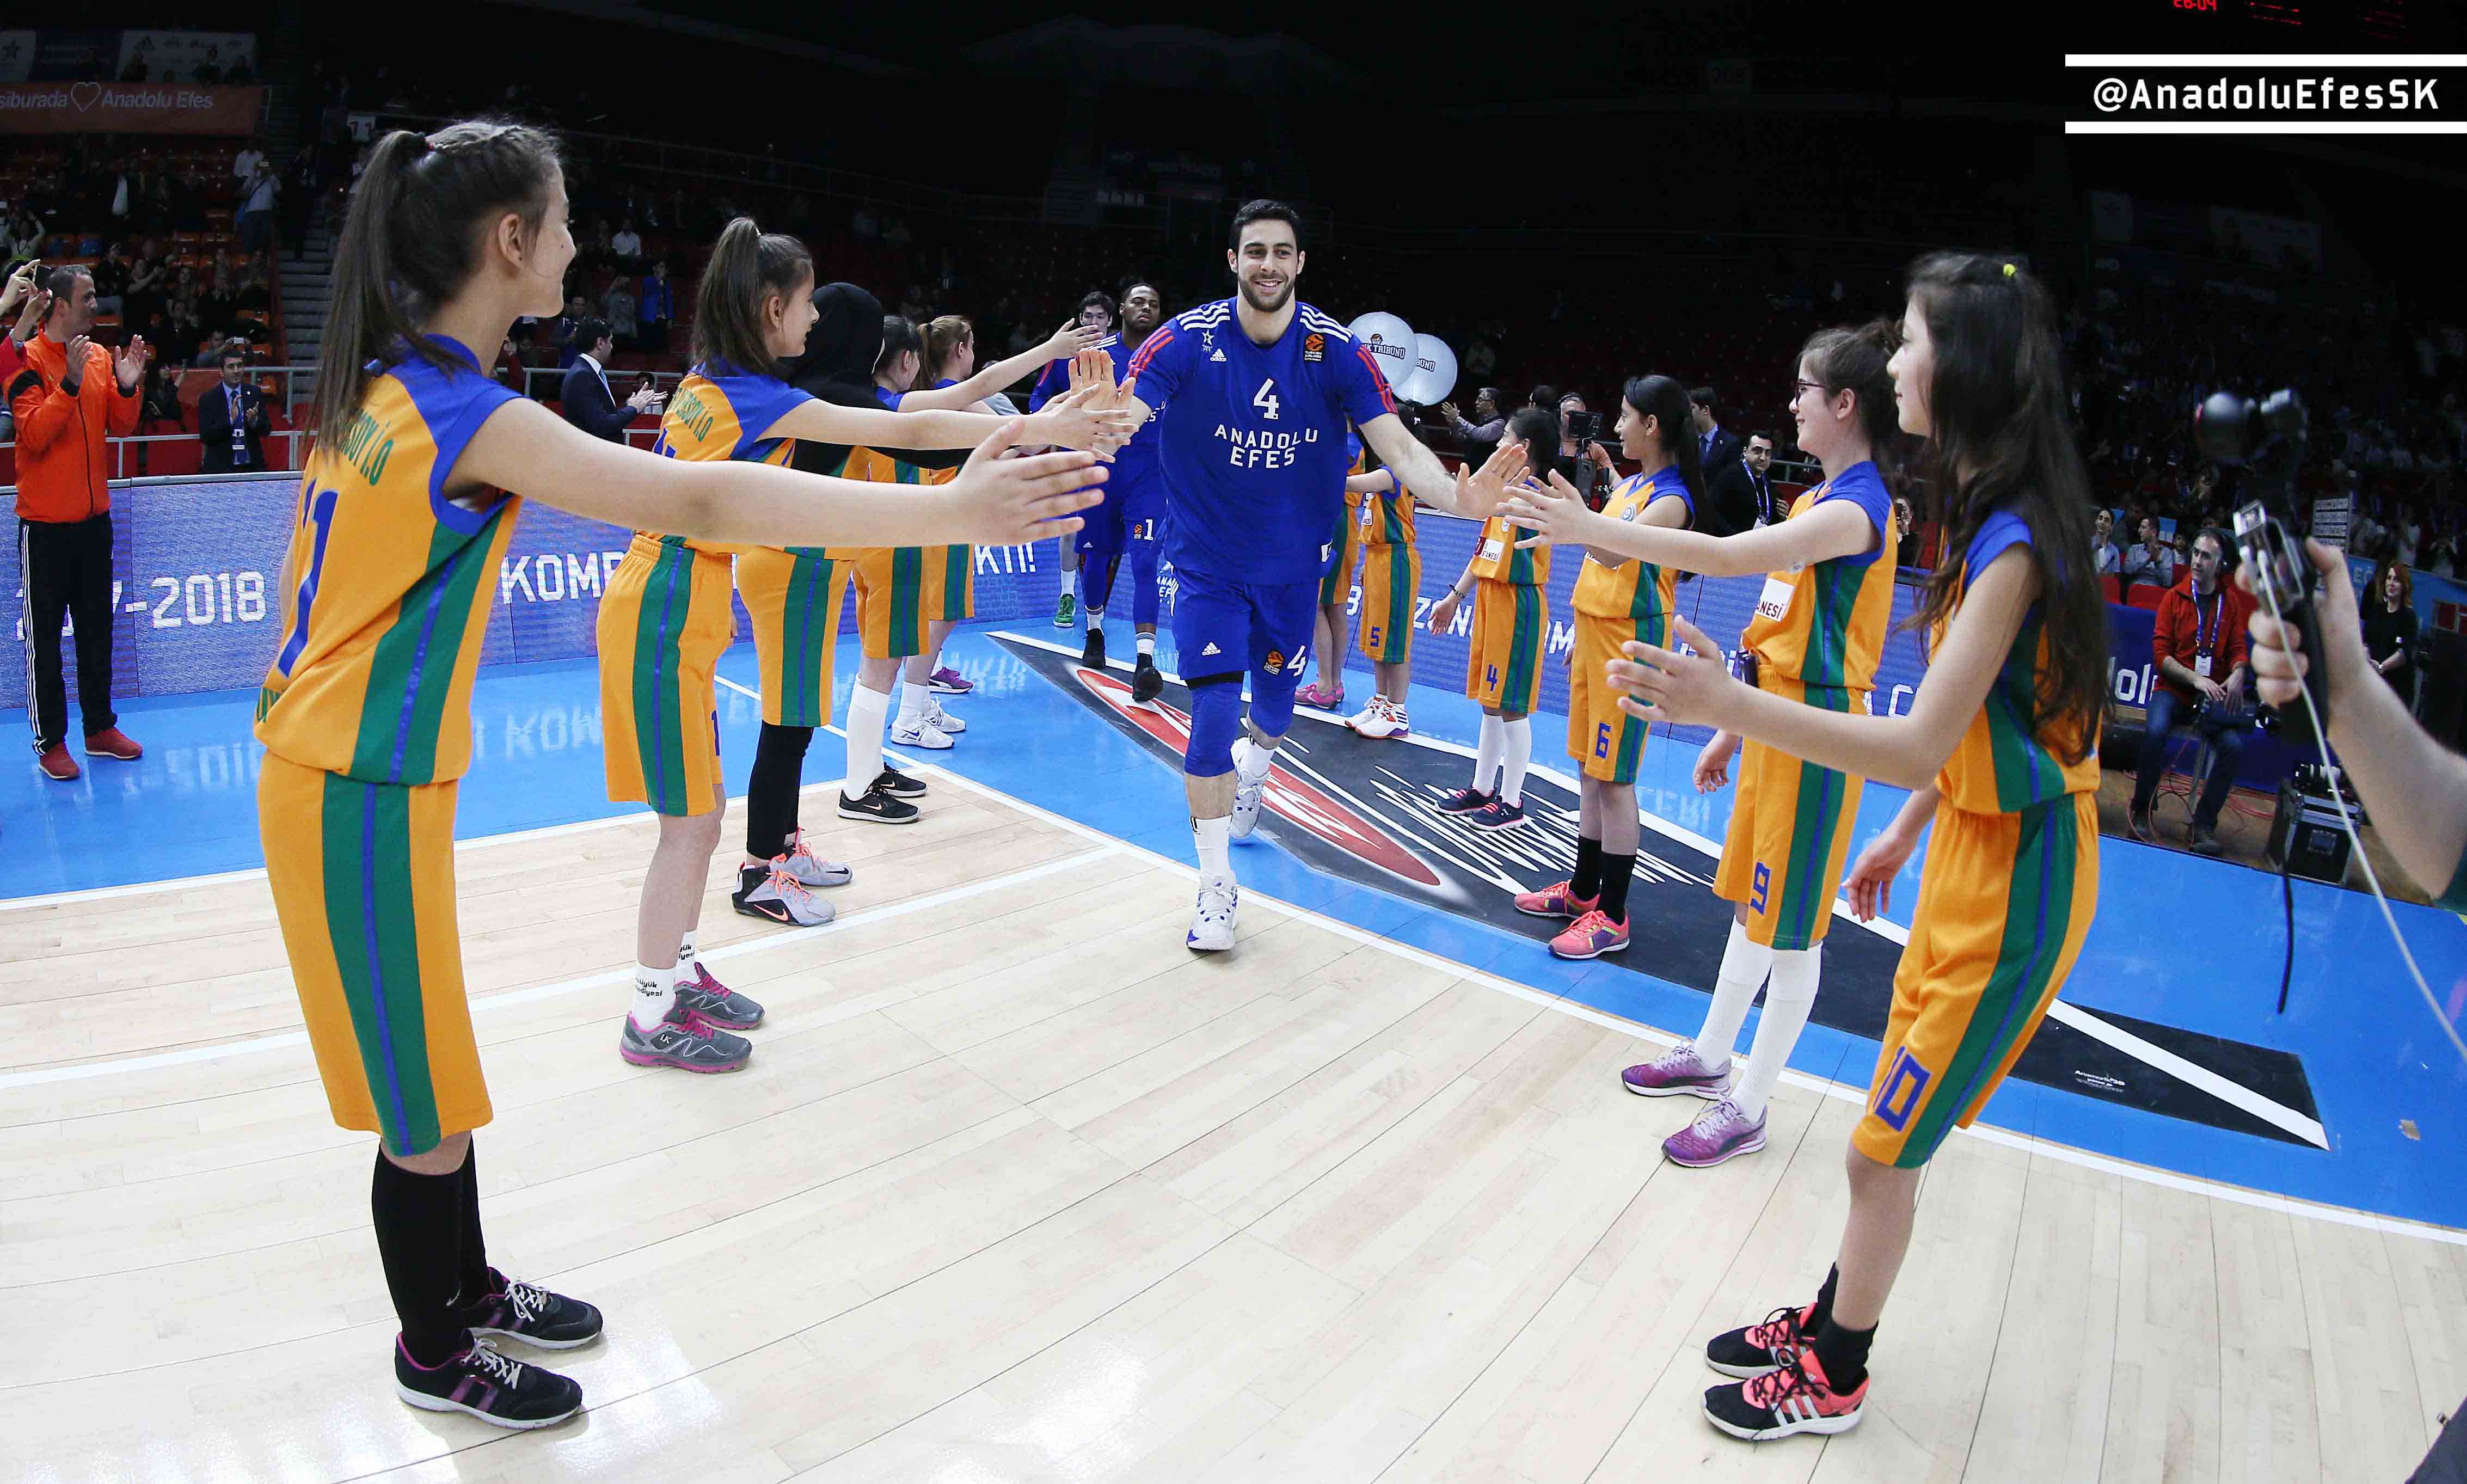 Olympiacos karşılaşmasında Bilecikli genç basketbolcuları ağırladık